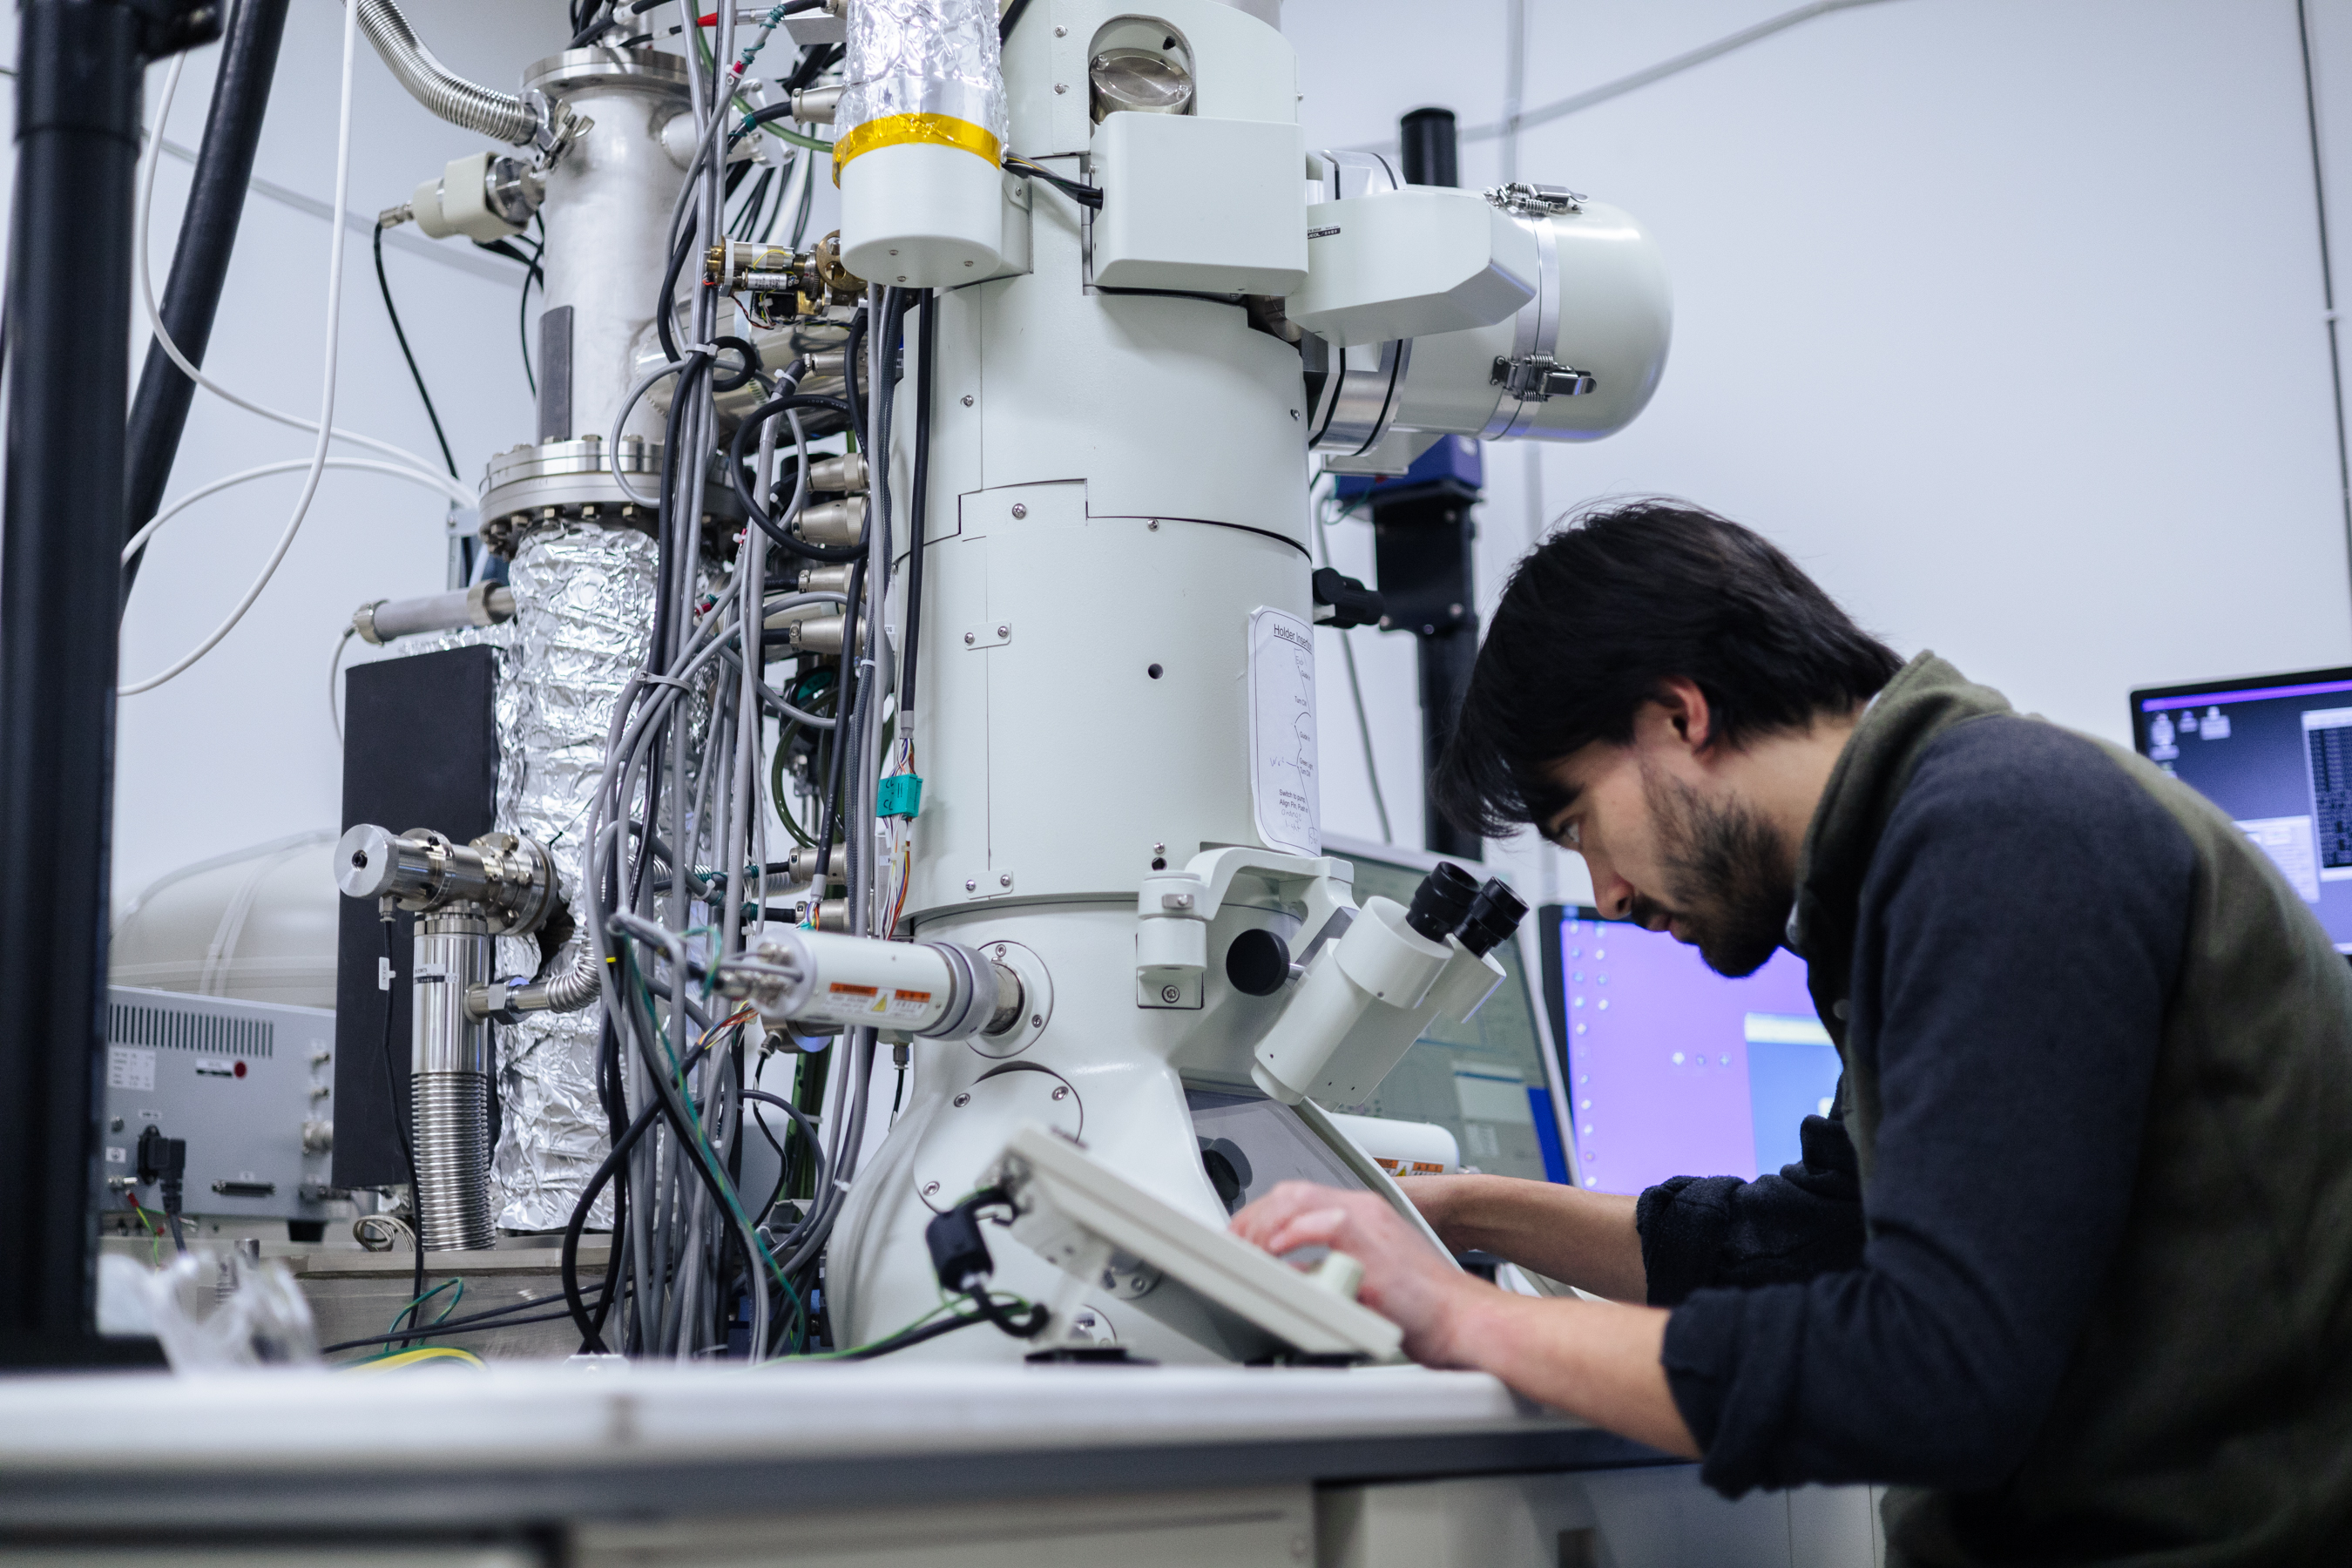 Hudson Shih conducts research in Seung Sae Hong's lab at UC Davis